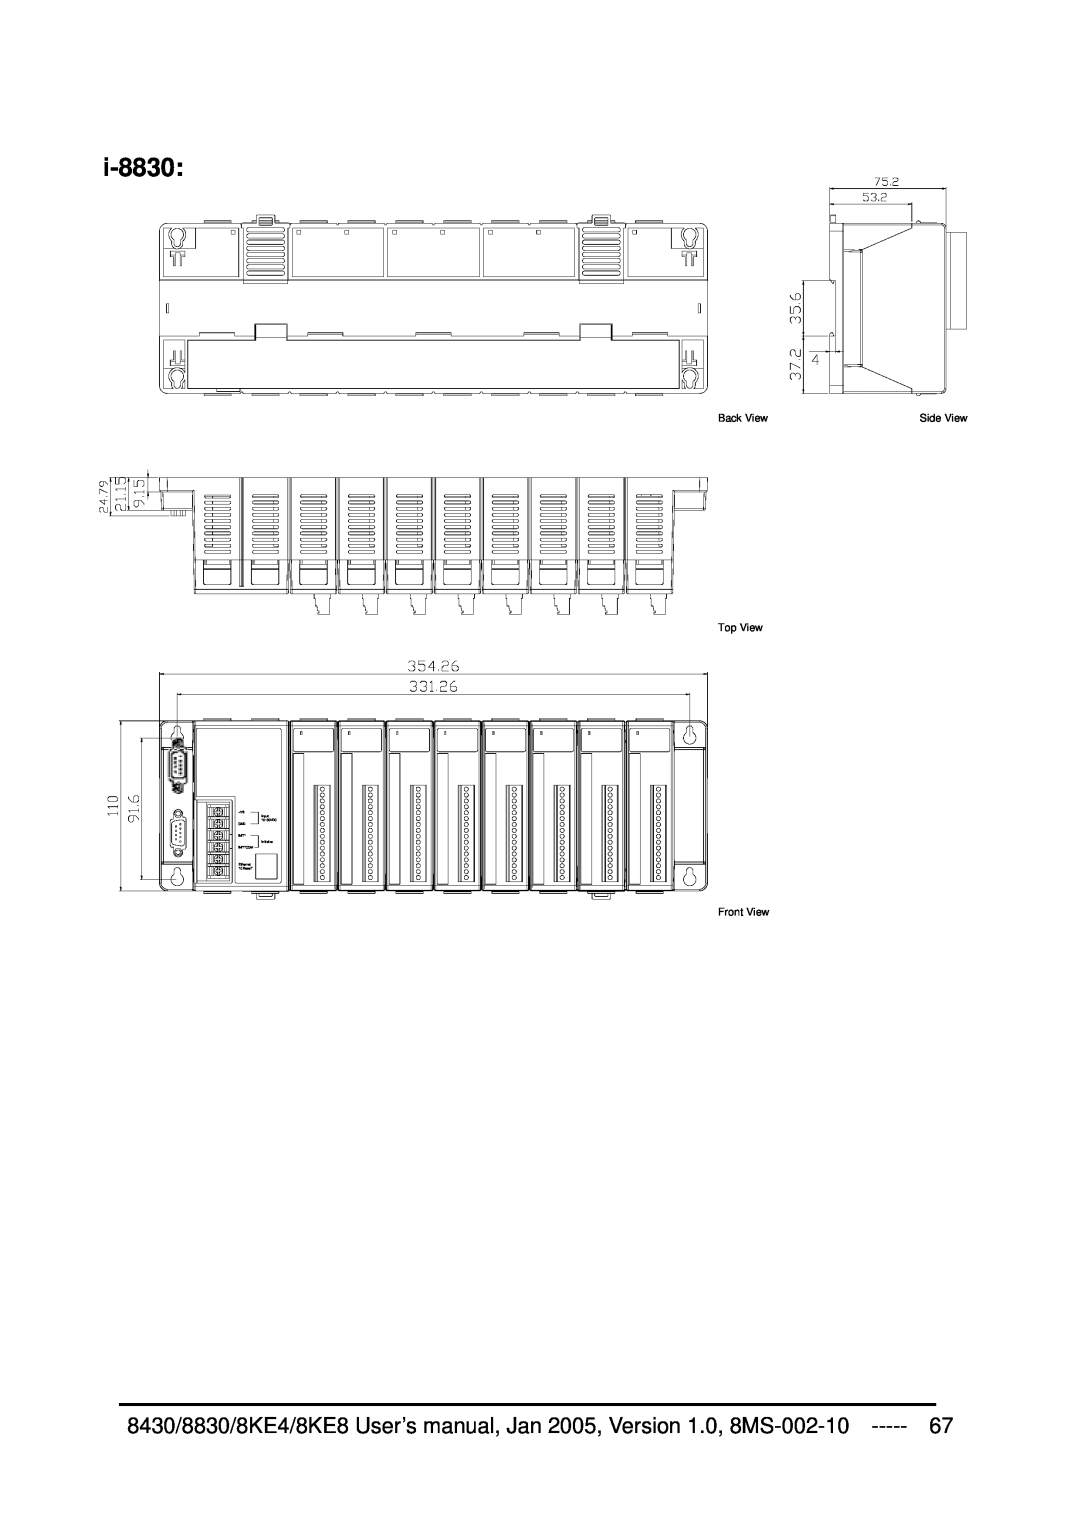 ICP DAS USA 8KE8, 8KE4, 8430 user manual i-8830, Back View, Side View, Top View, Front View 